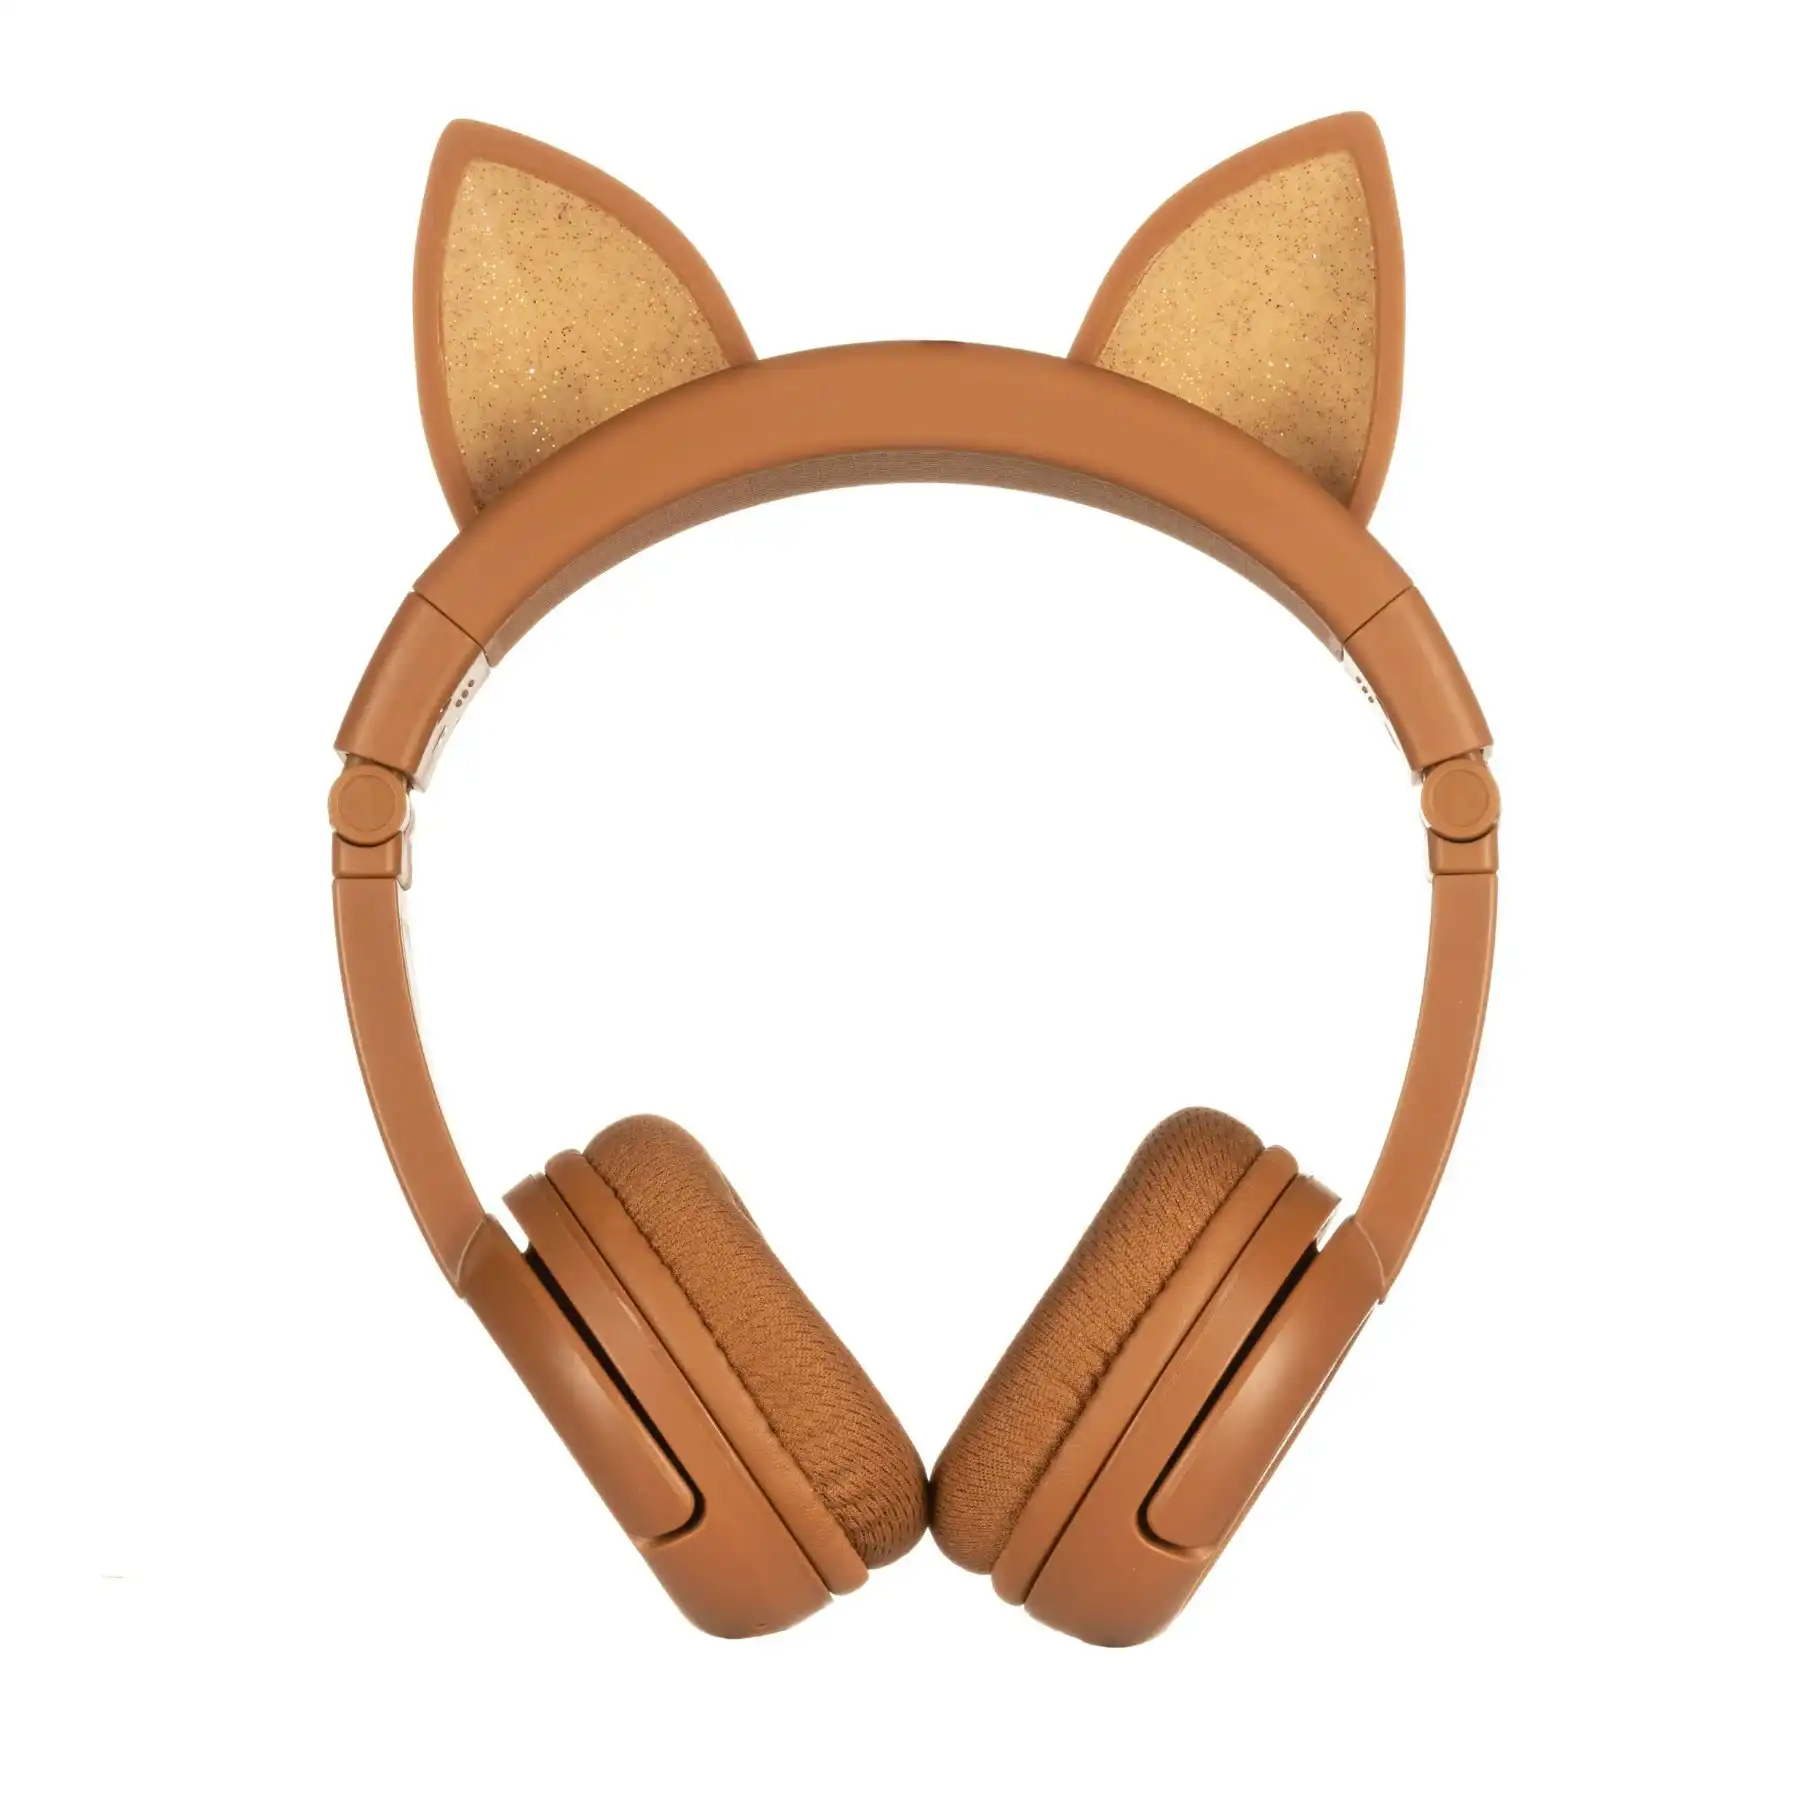 Buddyphones Playears+ Animal Ears Wireless Headphone - Fox Brown